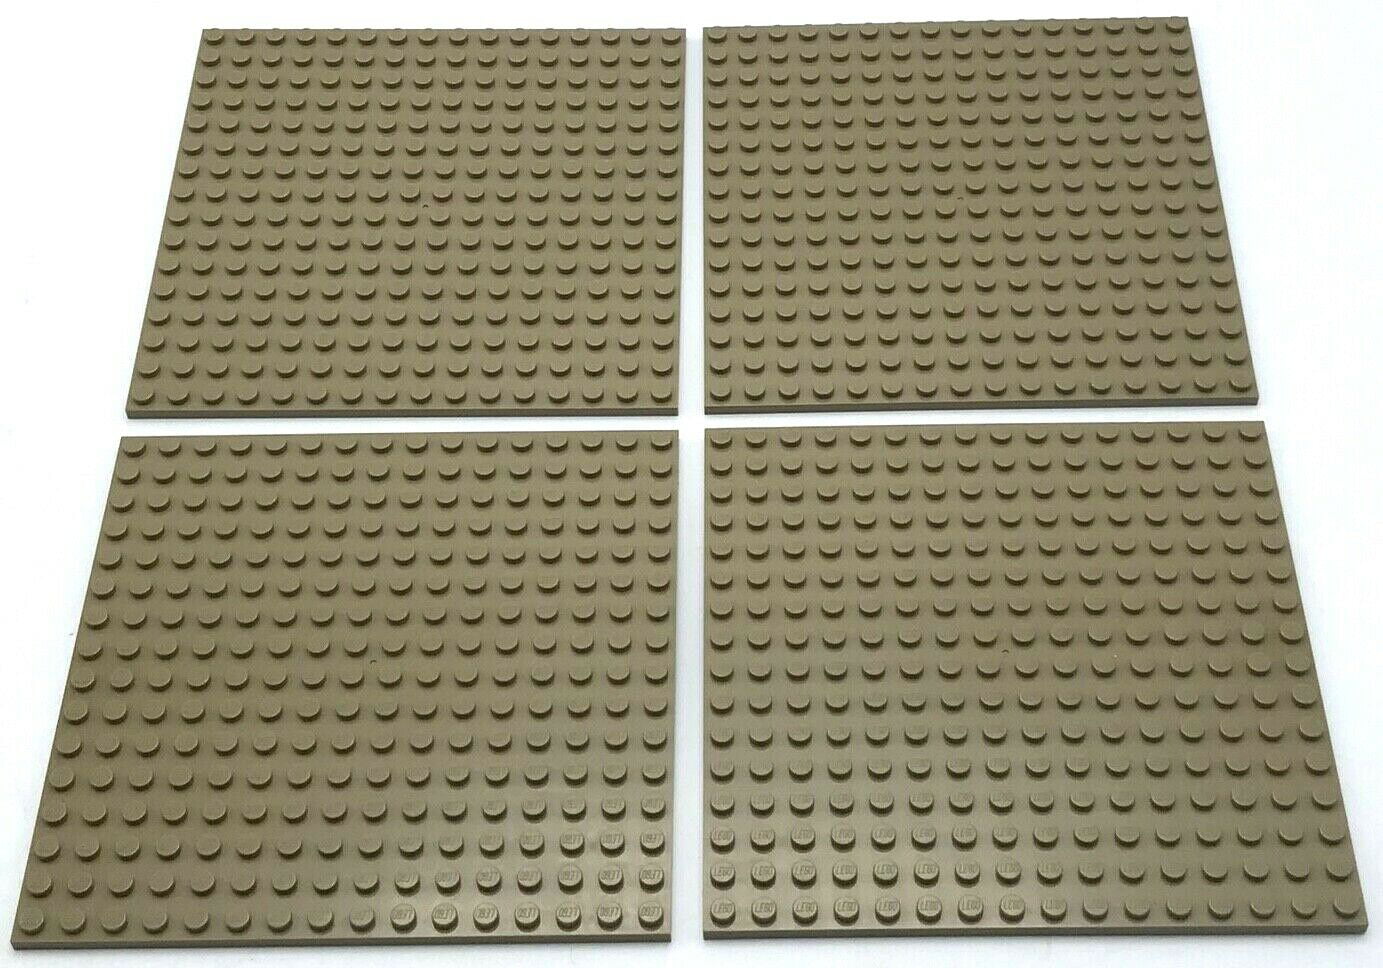 LEGO LOT OF 50 NEW DARK TAN 1 X 4 DOT PLATES BUILDING BLOCKS PARTS